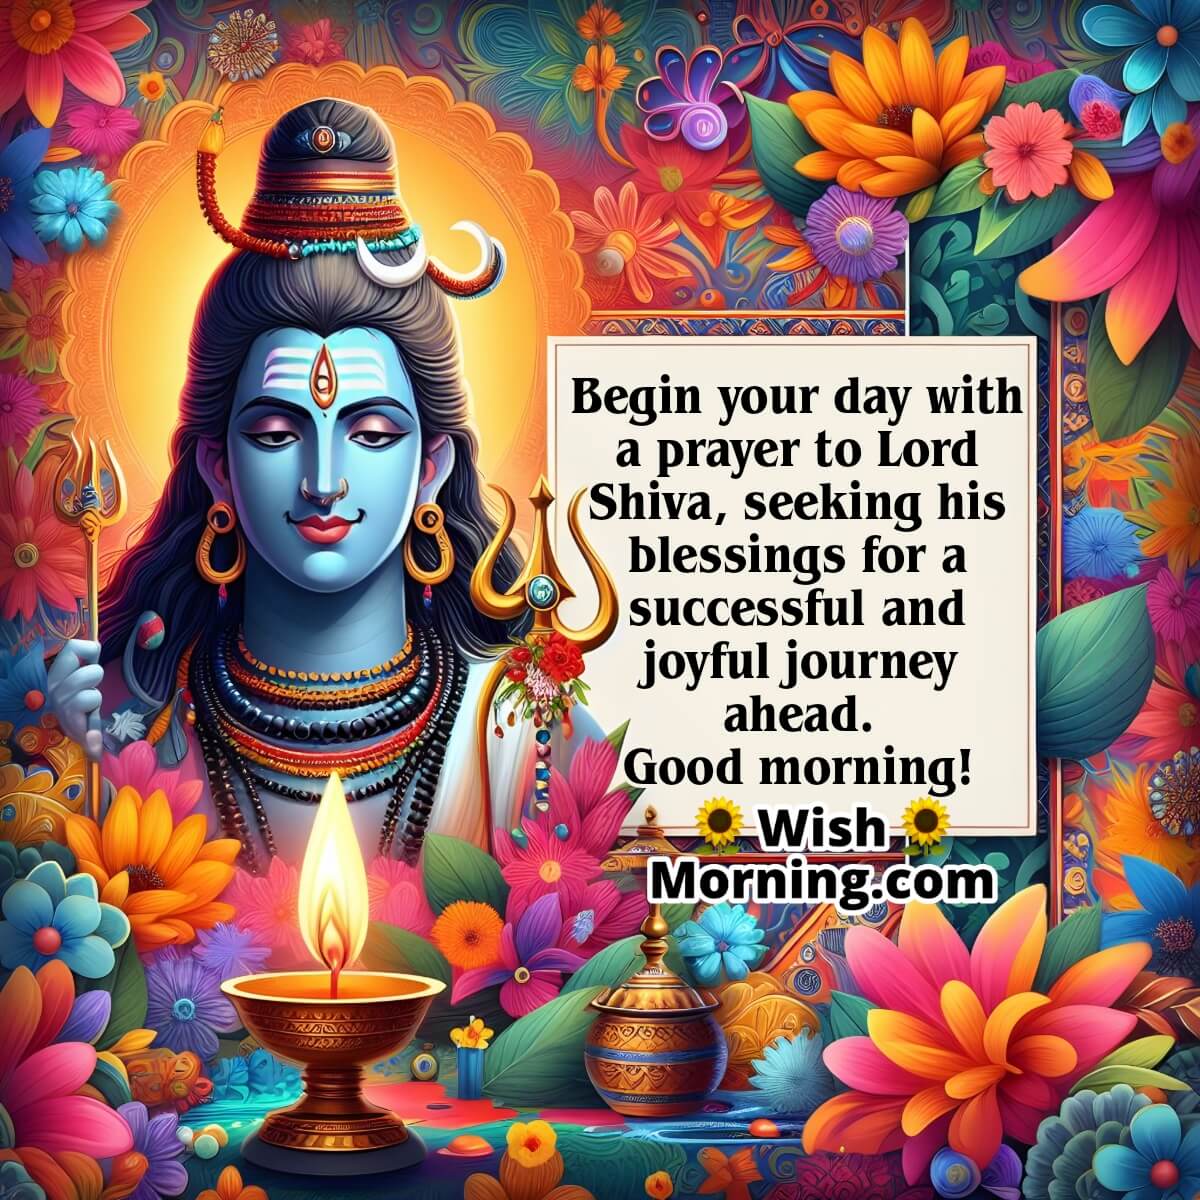 Good Morning Lord Shiva Blessing Image